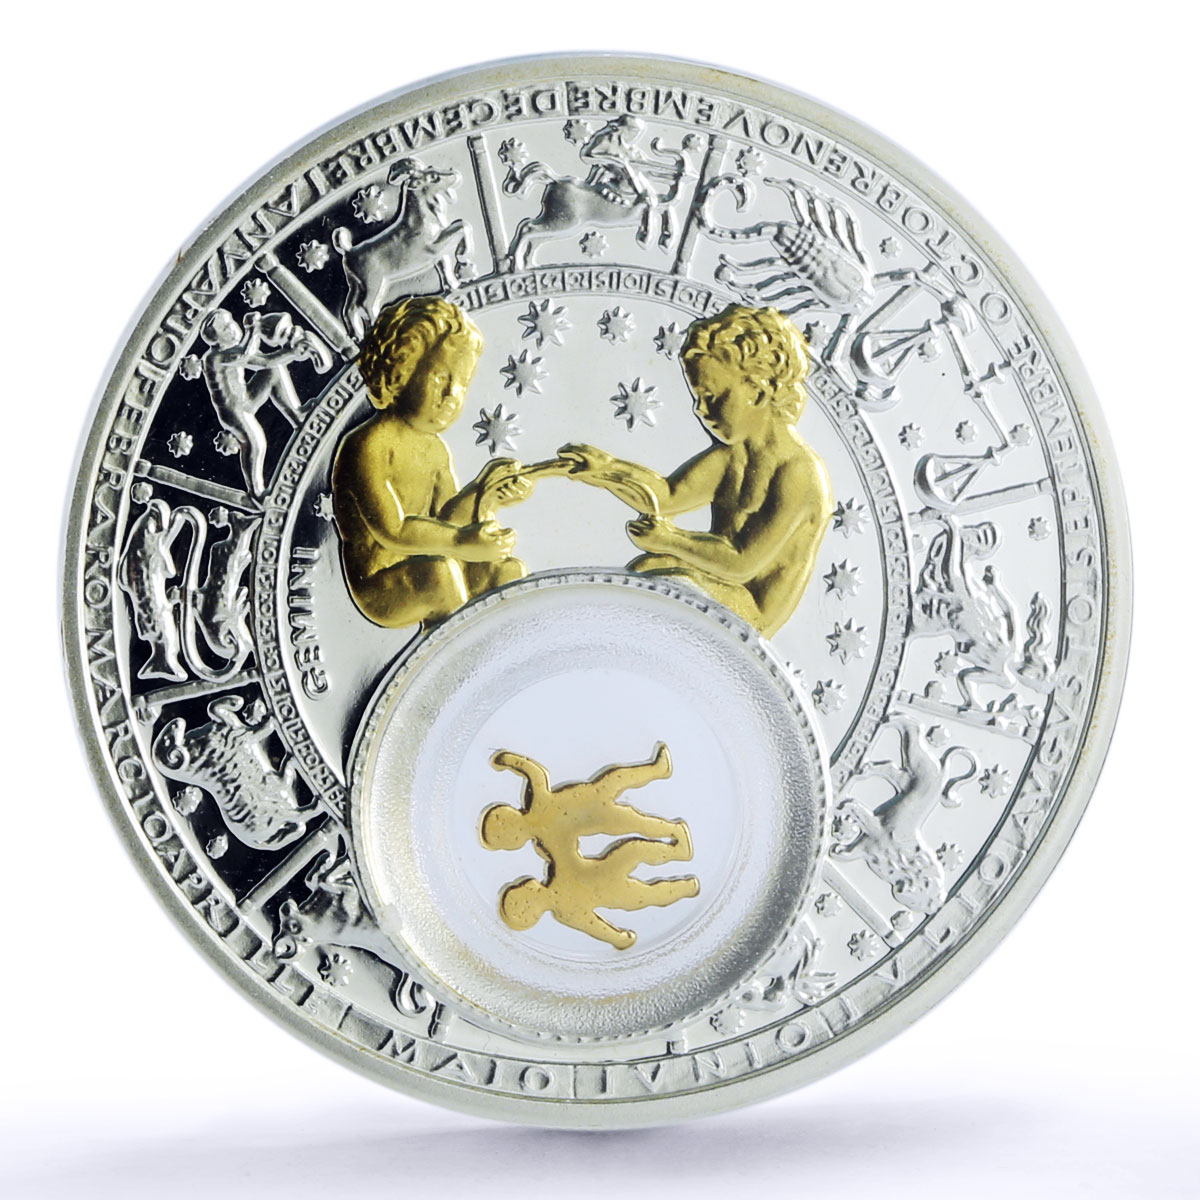 Belarus 20 rubles Zodiac Singns series Gemini PR70 PCGS silver coin 2013